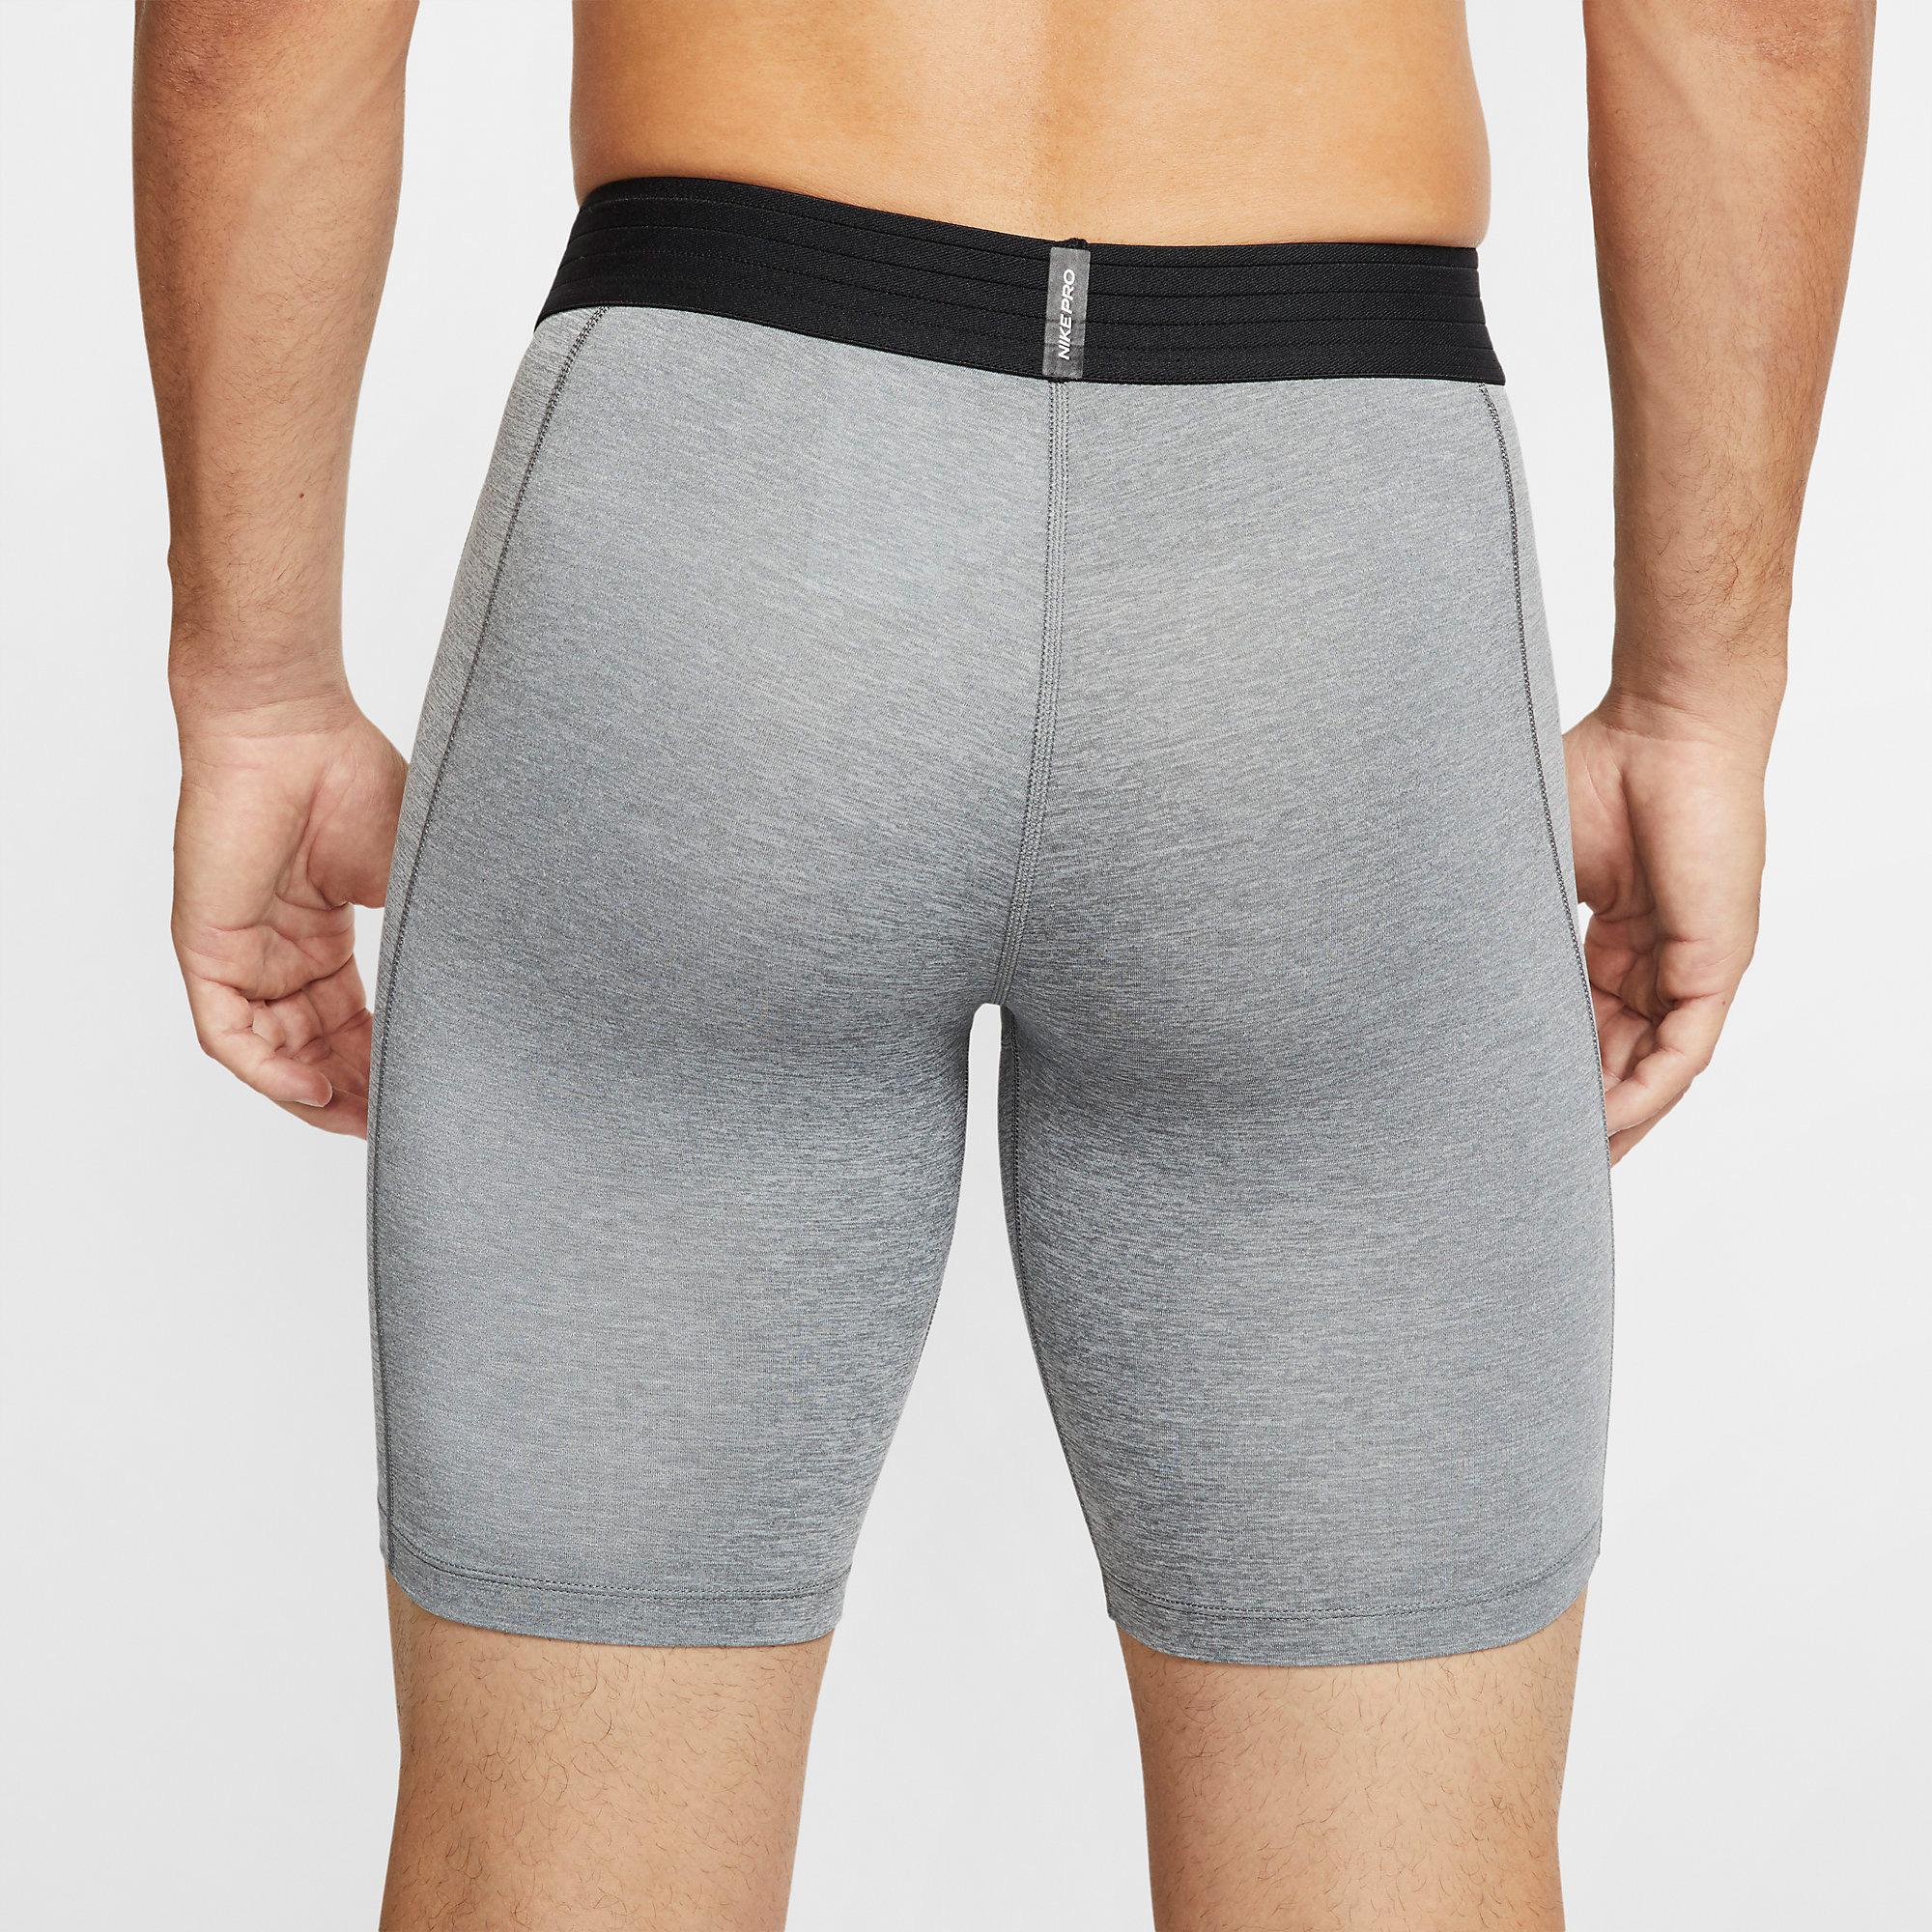 Nike Mens Pro Shorts - Smoke Grey - Tennisnuts.com